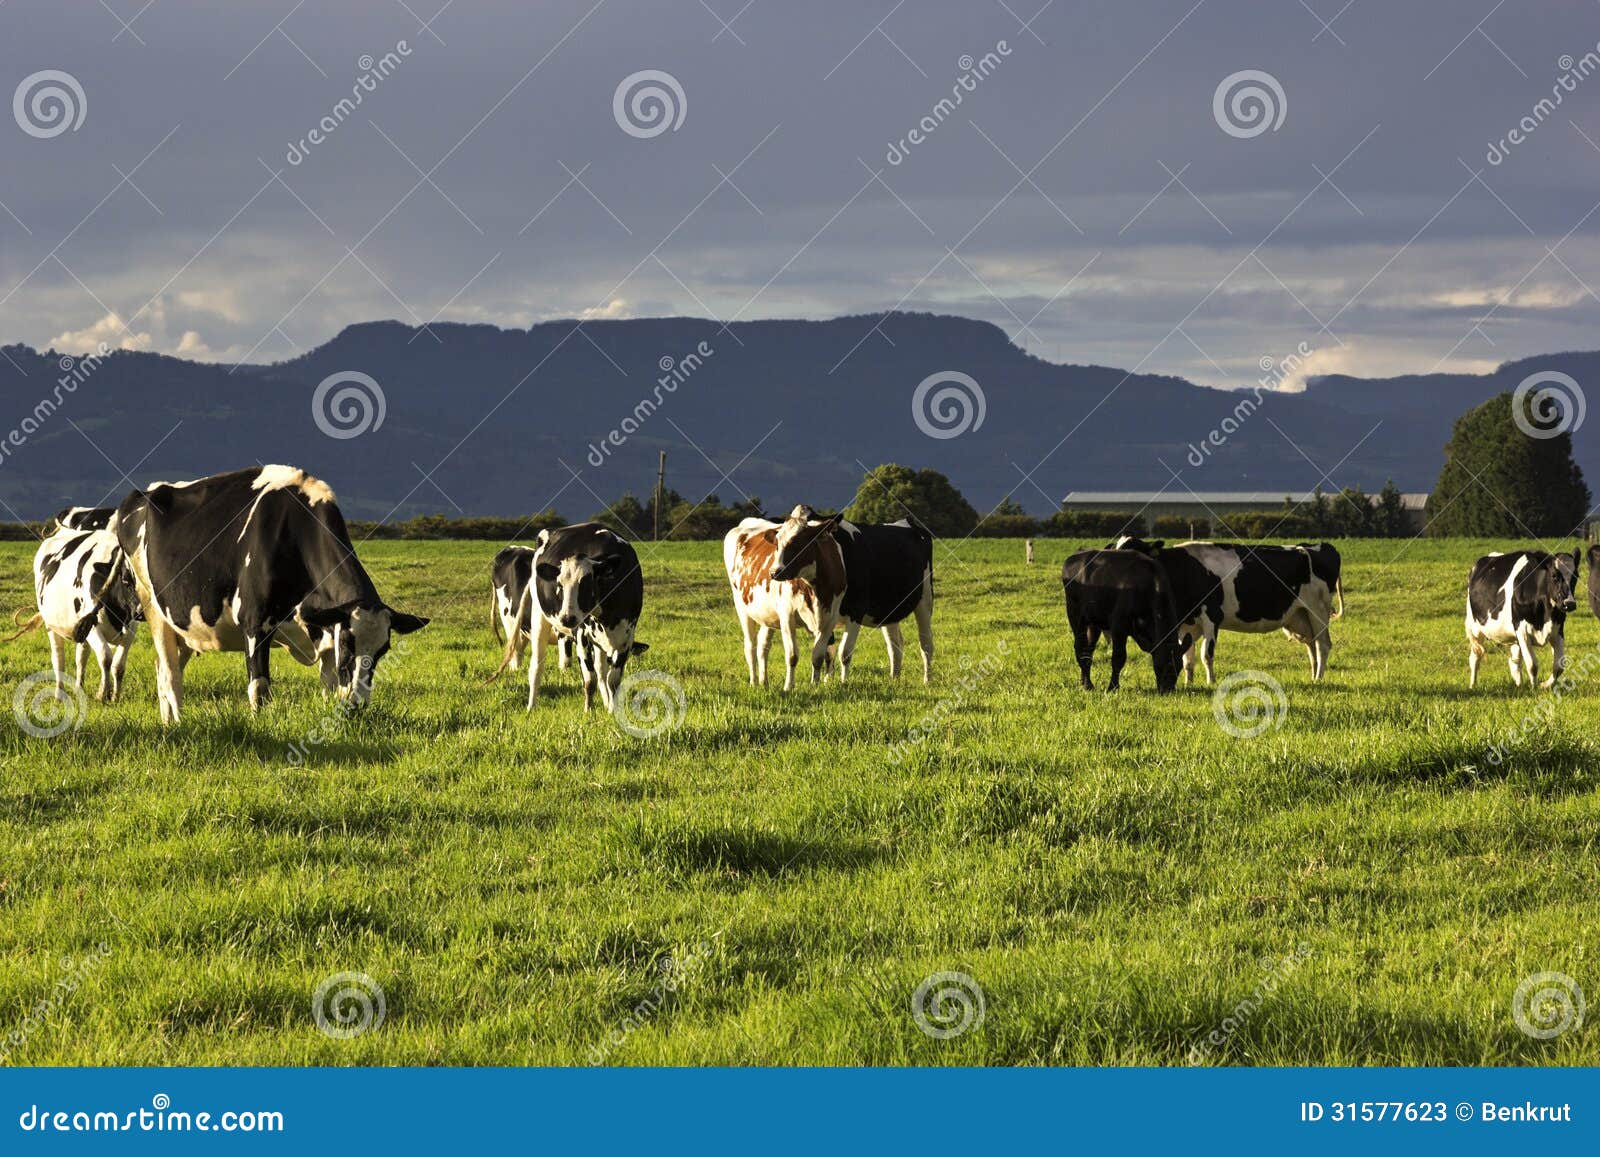 cow farm in australia